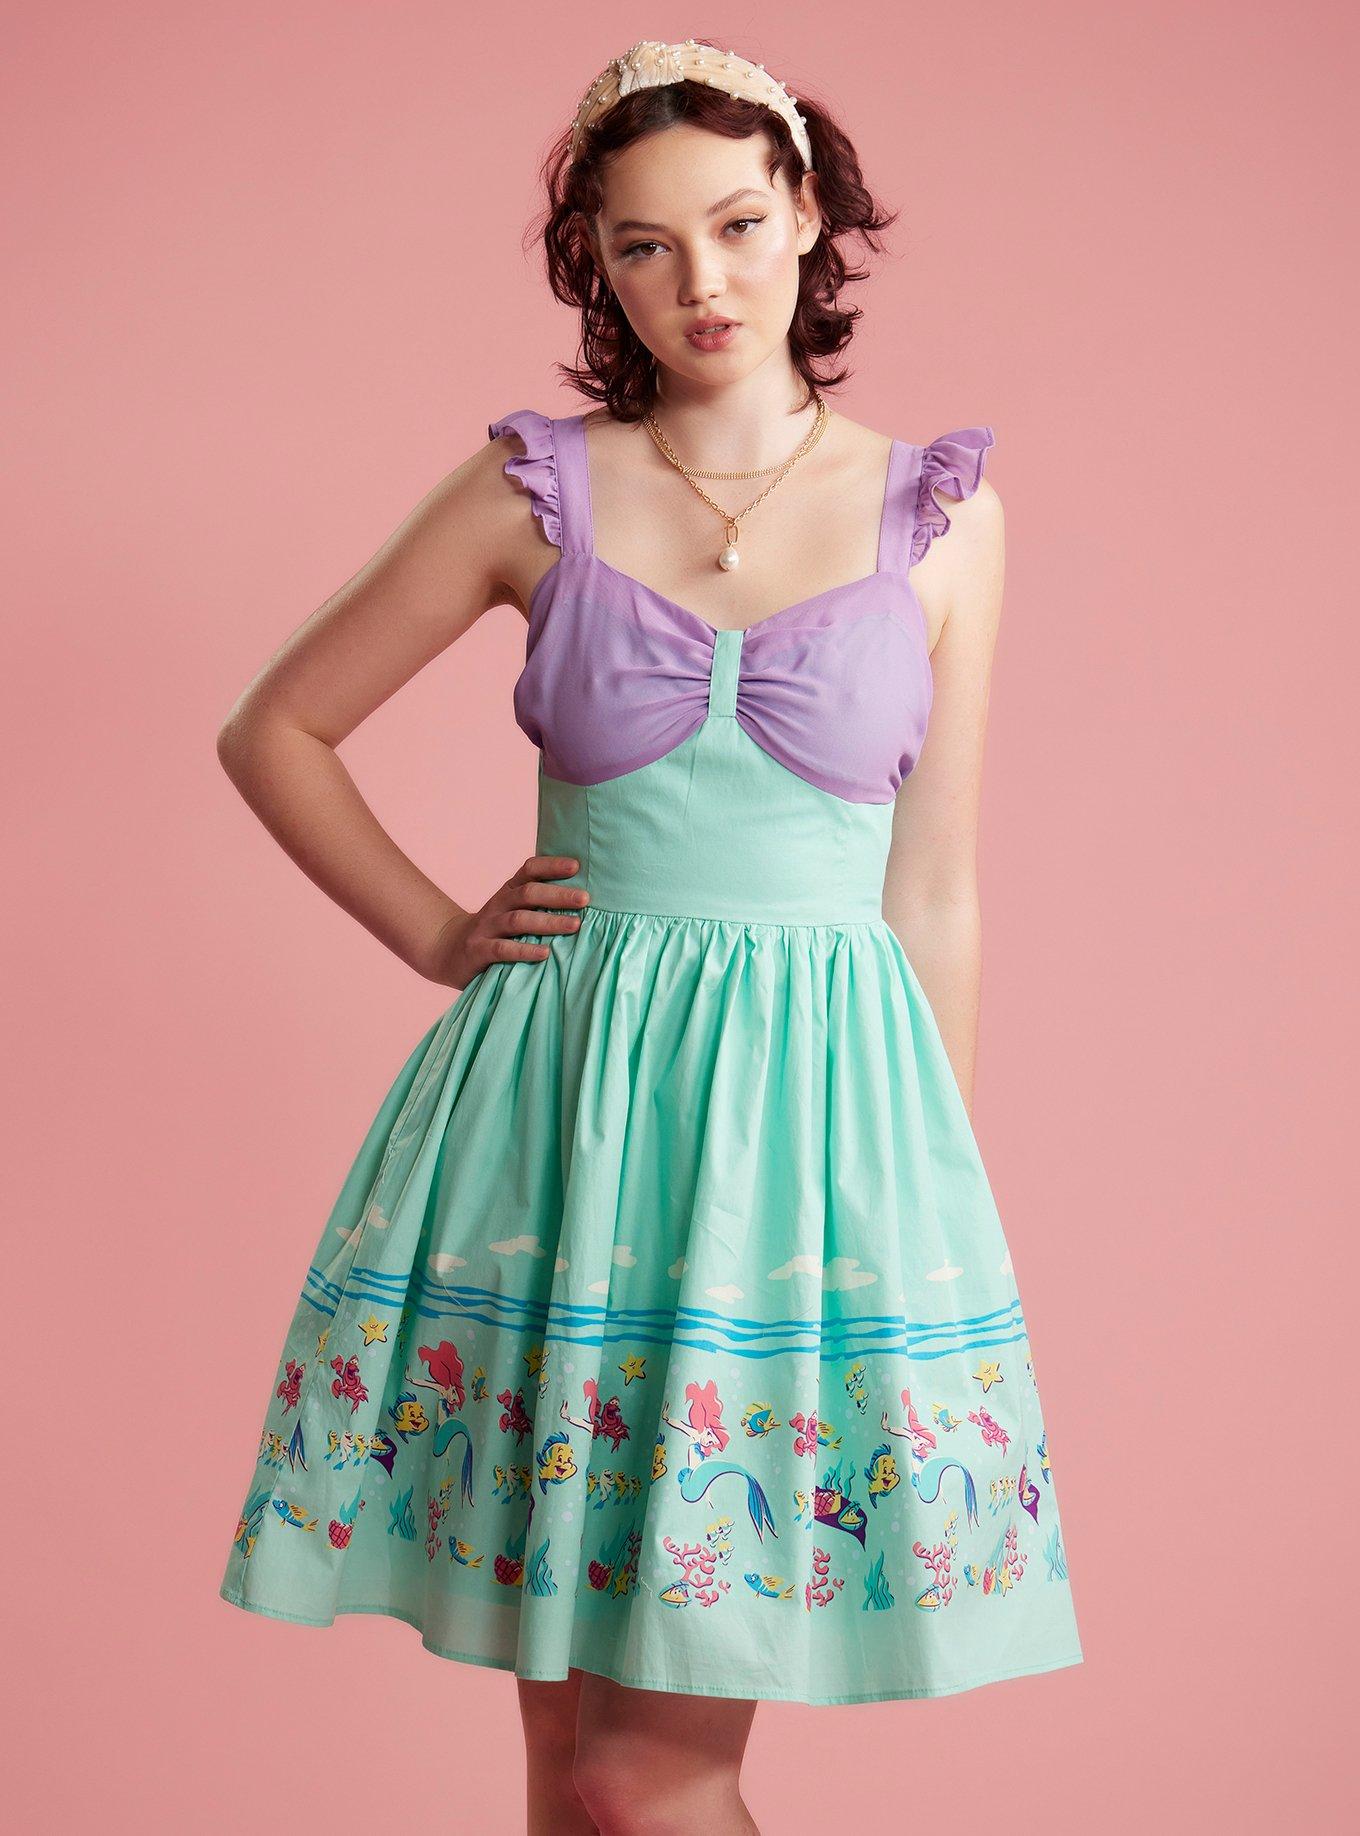 Dapper Day Outfit Ideas | Vintage Disney Dresses Her Universe Disney The Little Mermaid Retro Dress $41.93 AT vintagedancer.com